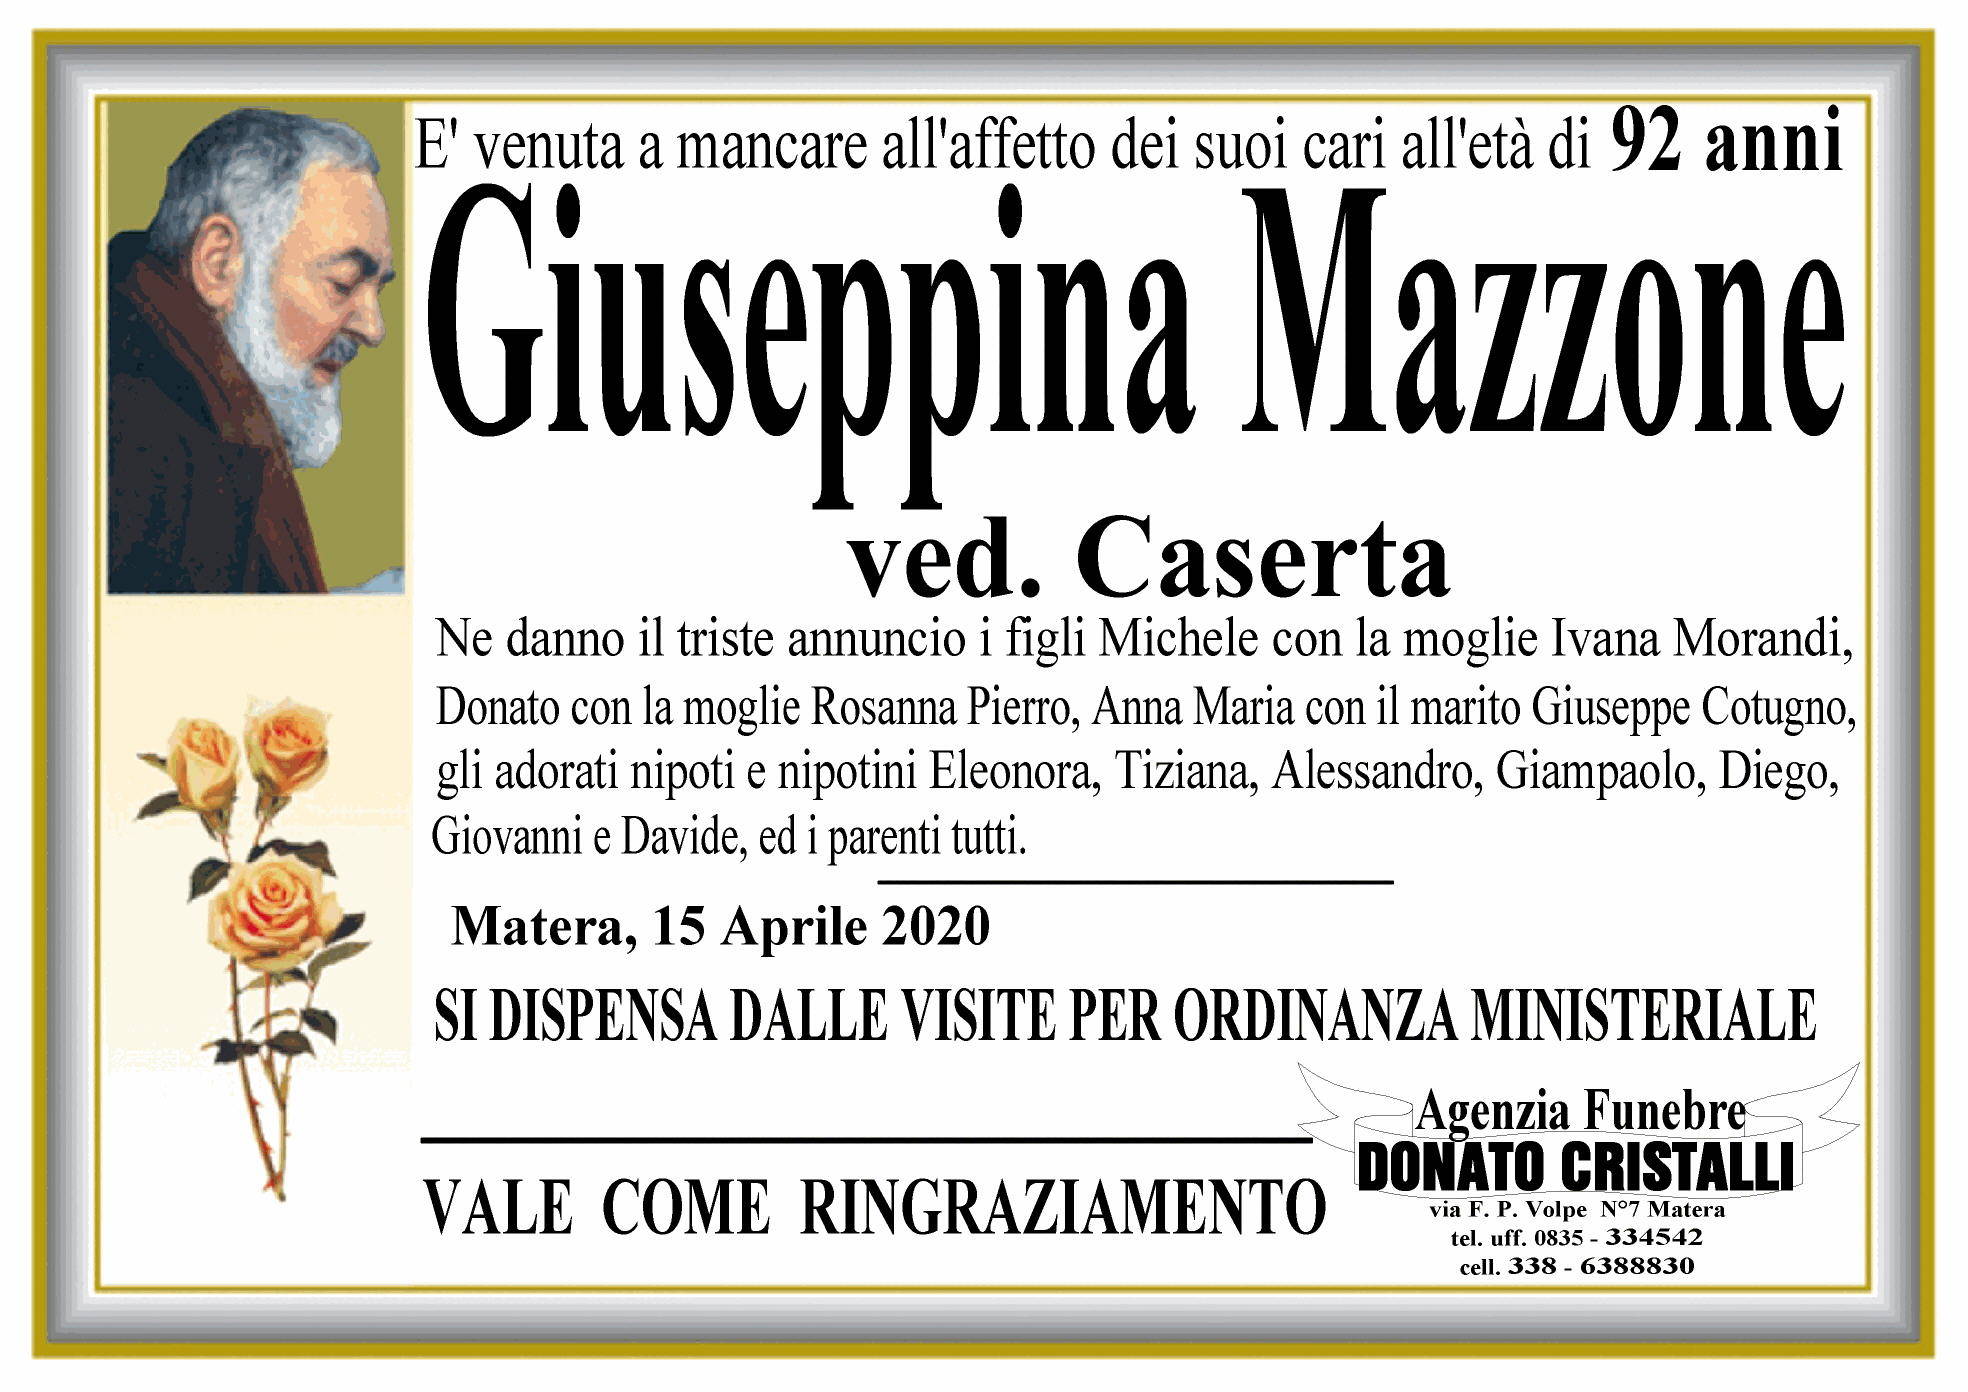 Giuseppina Mazzone